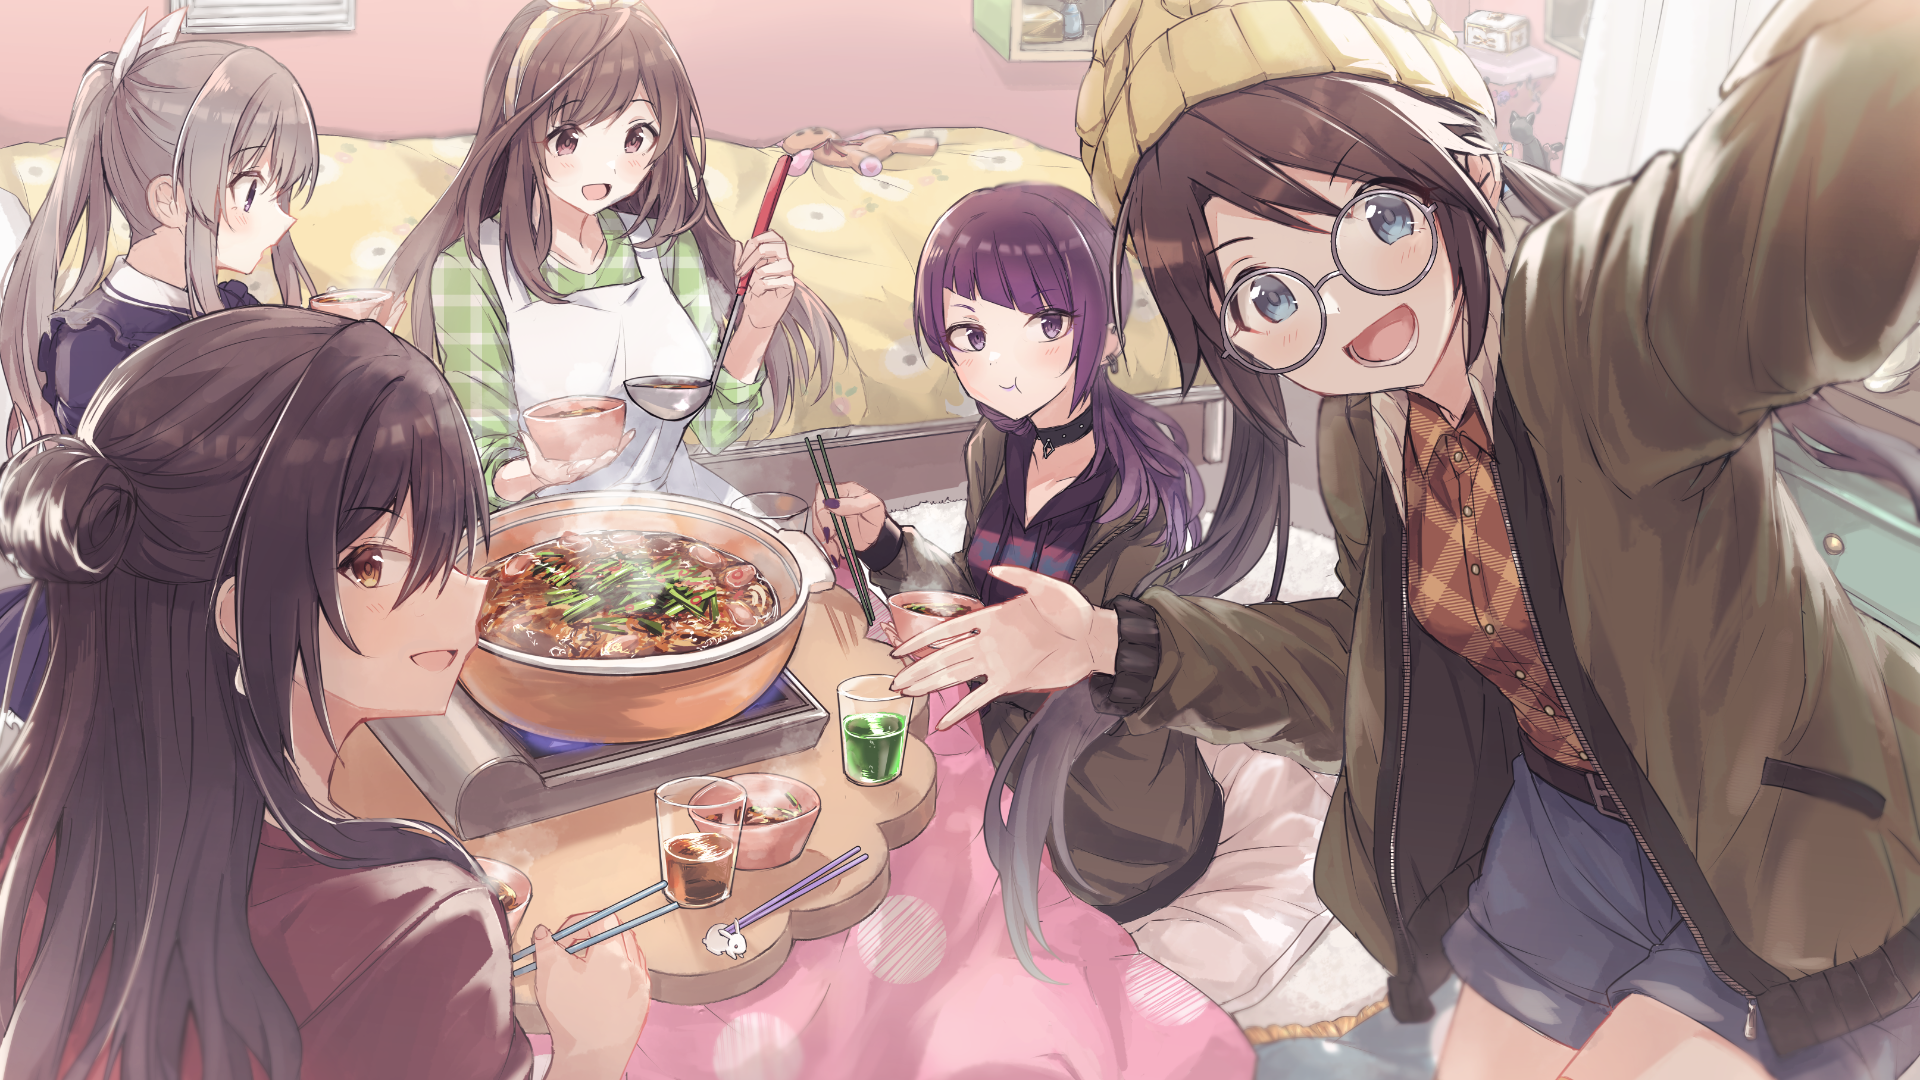 Anime Anime Girls Digital Art Artwork 2D Looking At Viewer Anime Food Glasses Food Drink Chopsticks  1920x1080